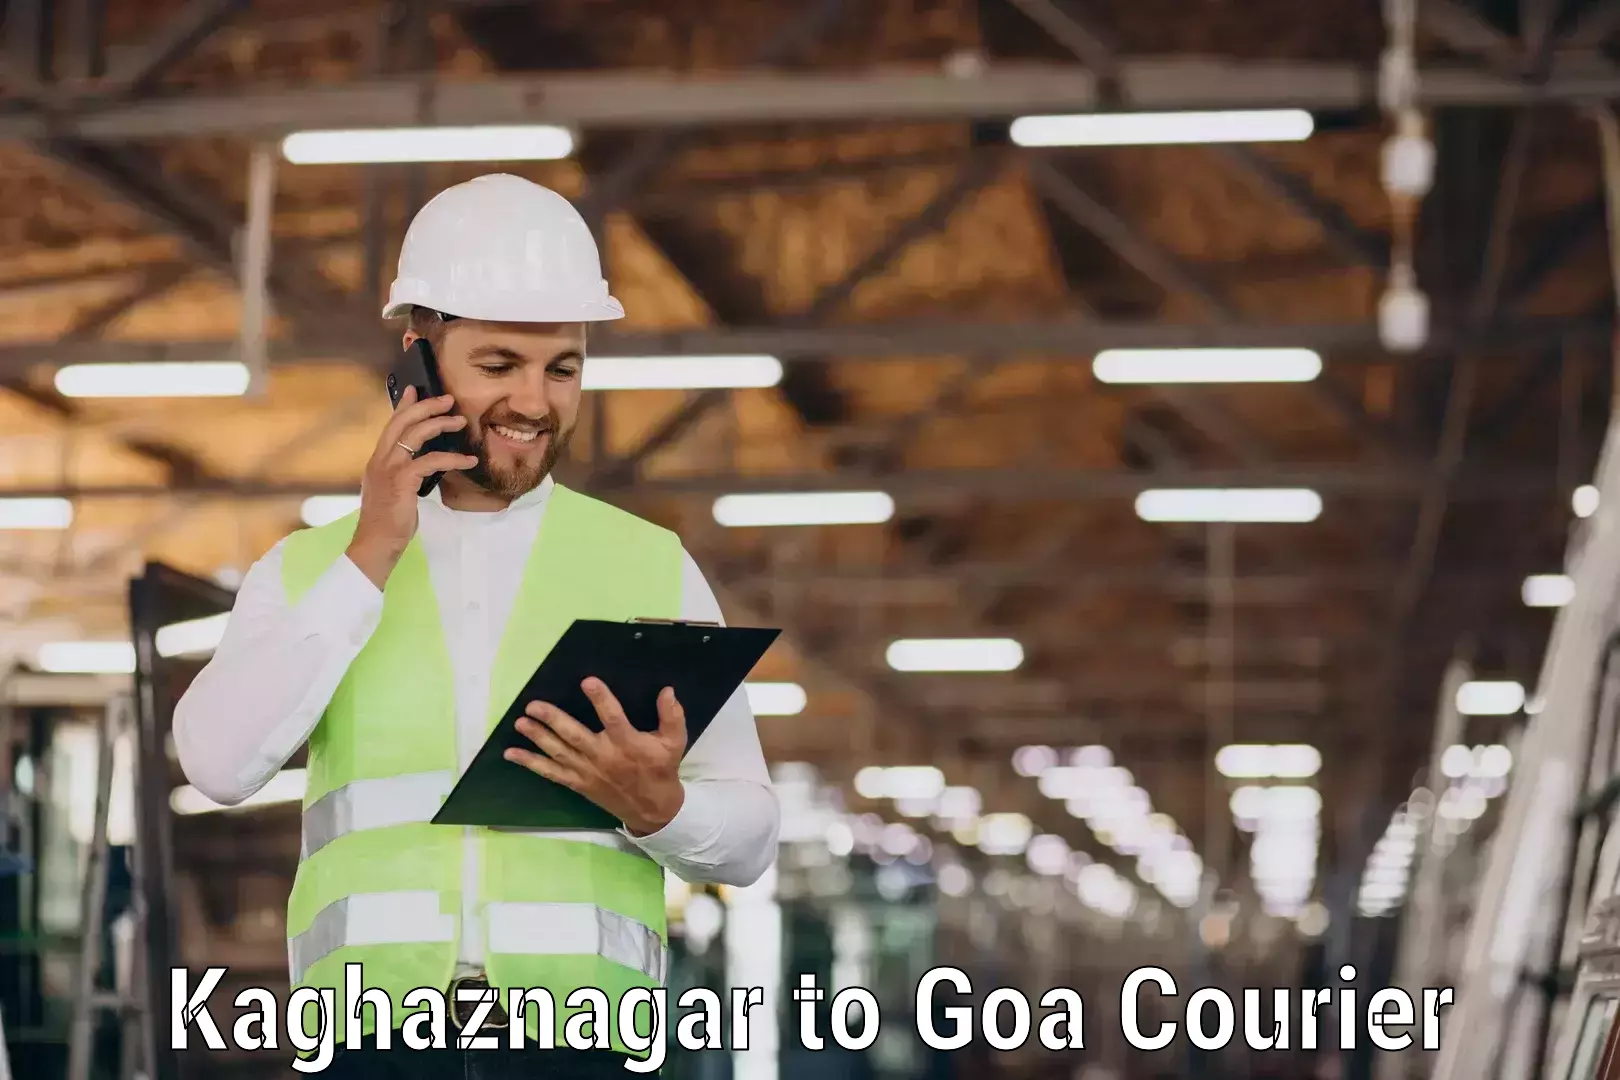 Courier service partnerships Kaghaznagar to Panaji